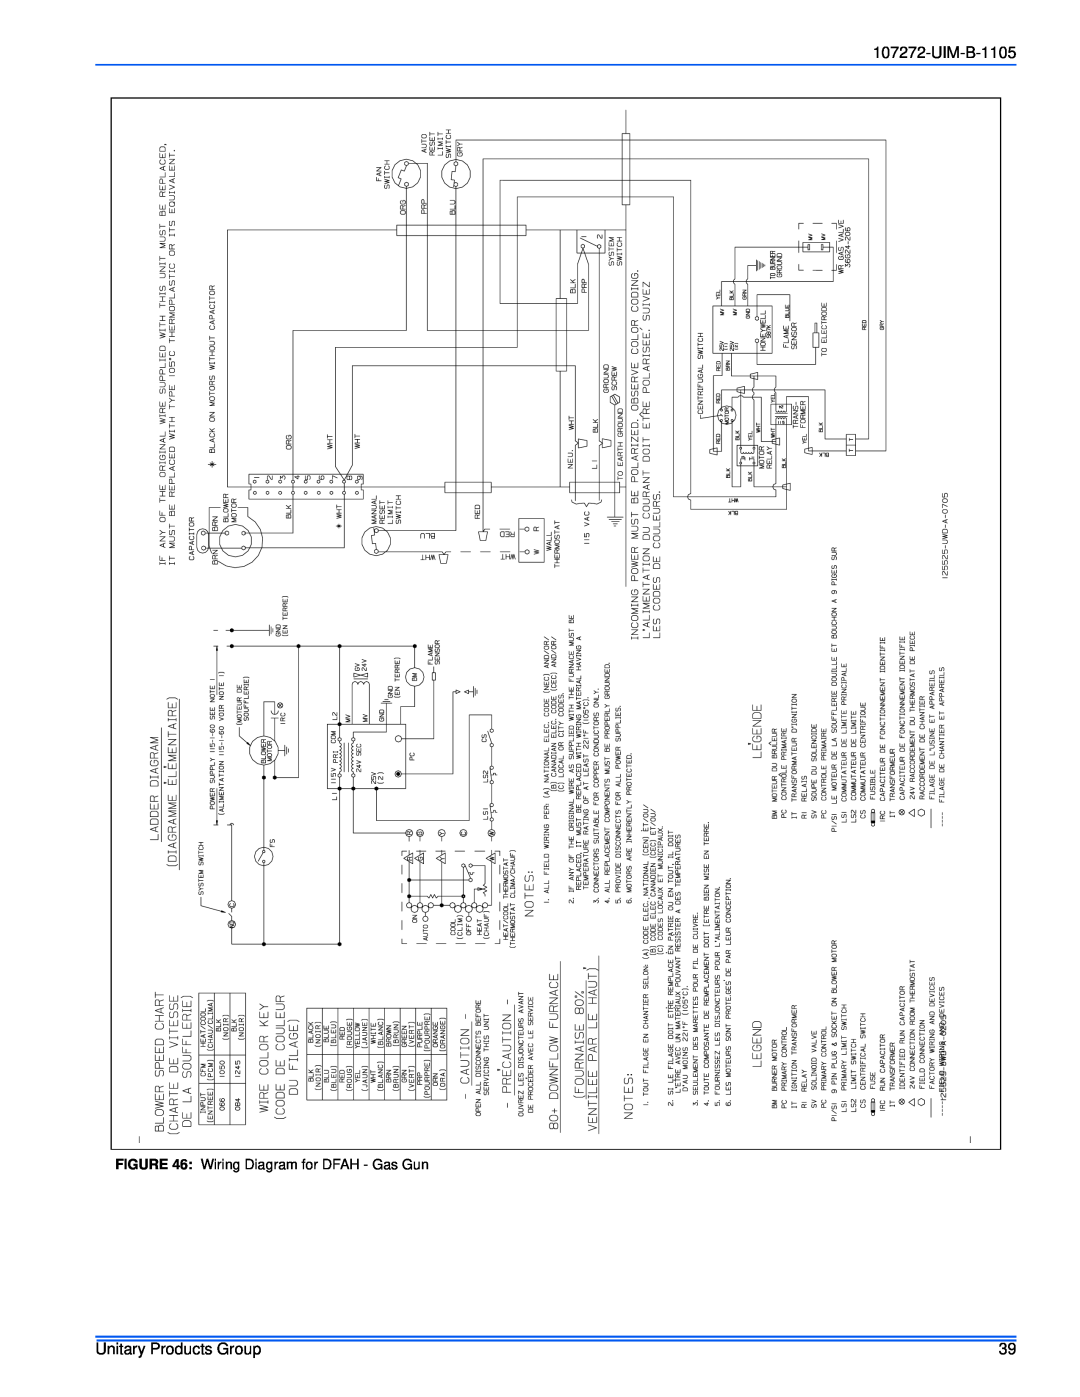 York DFAA installation manual Unitary Products Group, UIM-B-1105, Wiring Diagram for DFAH - Gas Gun 